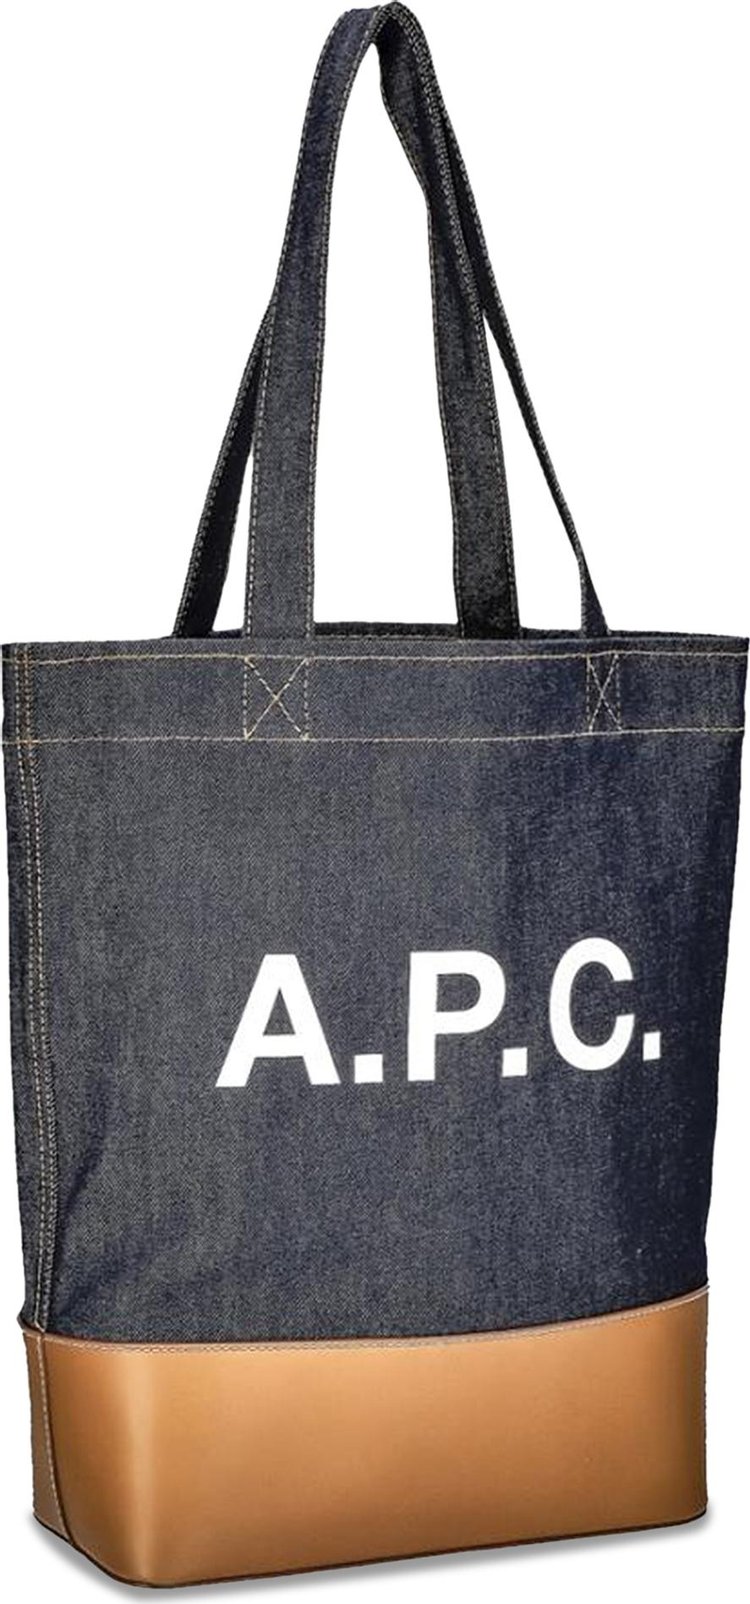 A.P.C. Axel Tote Bag 'Caramel'